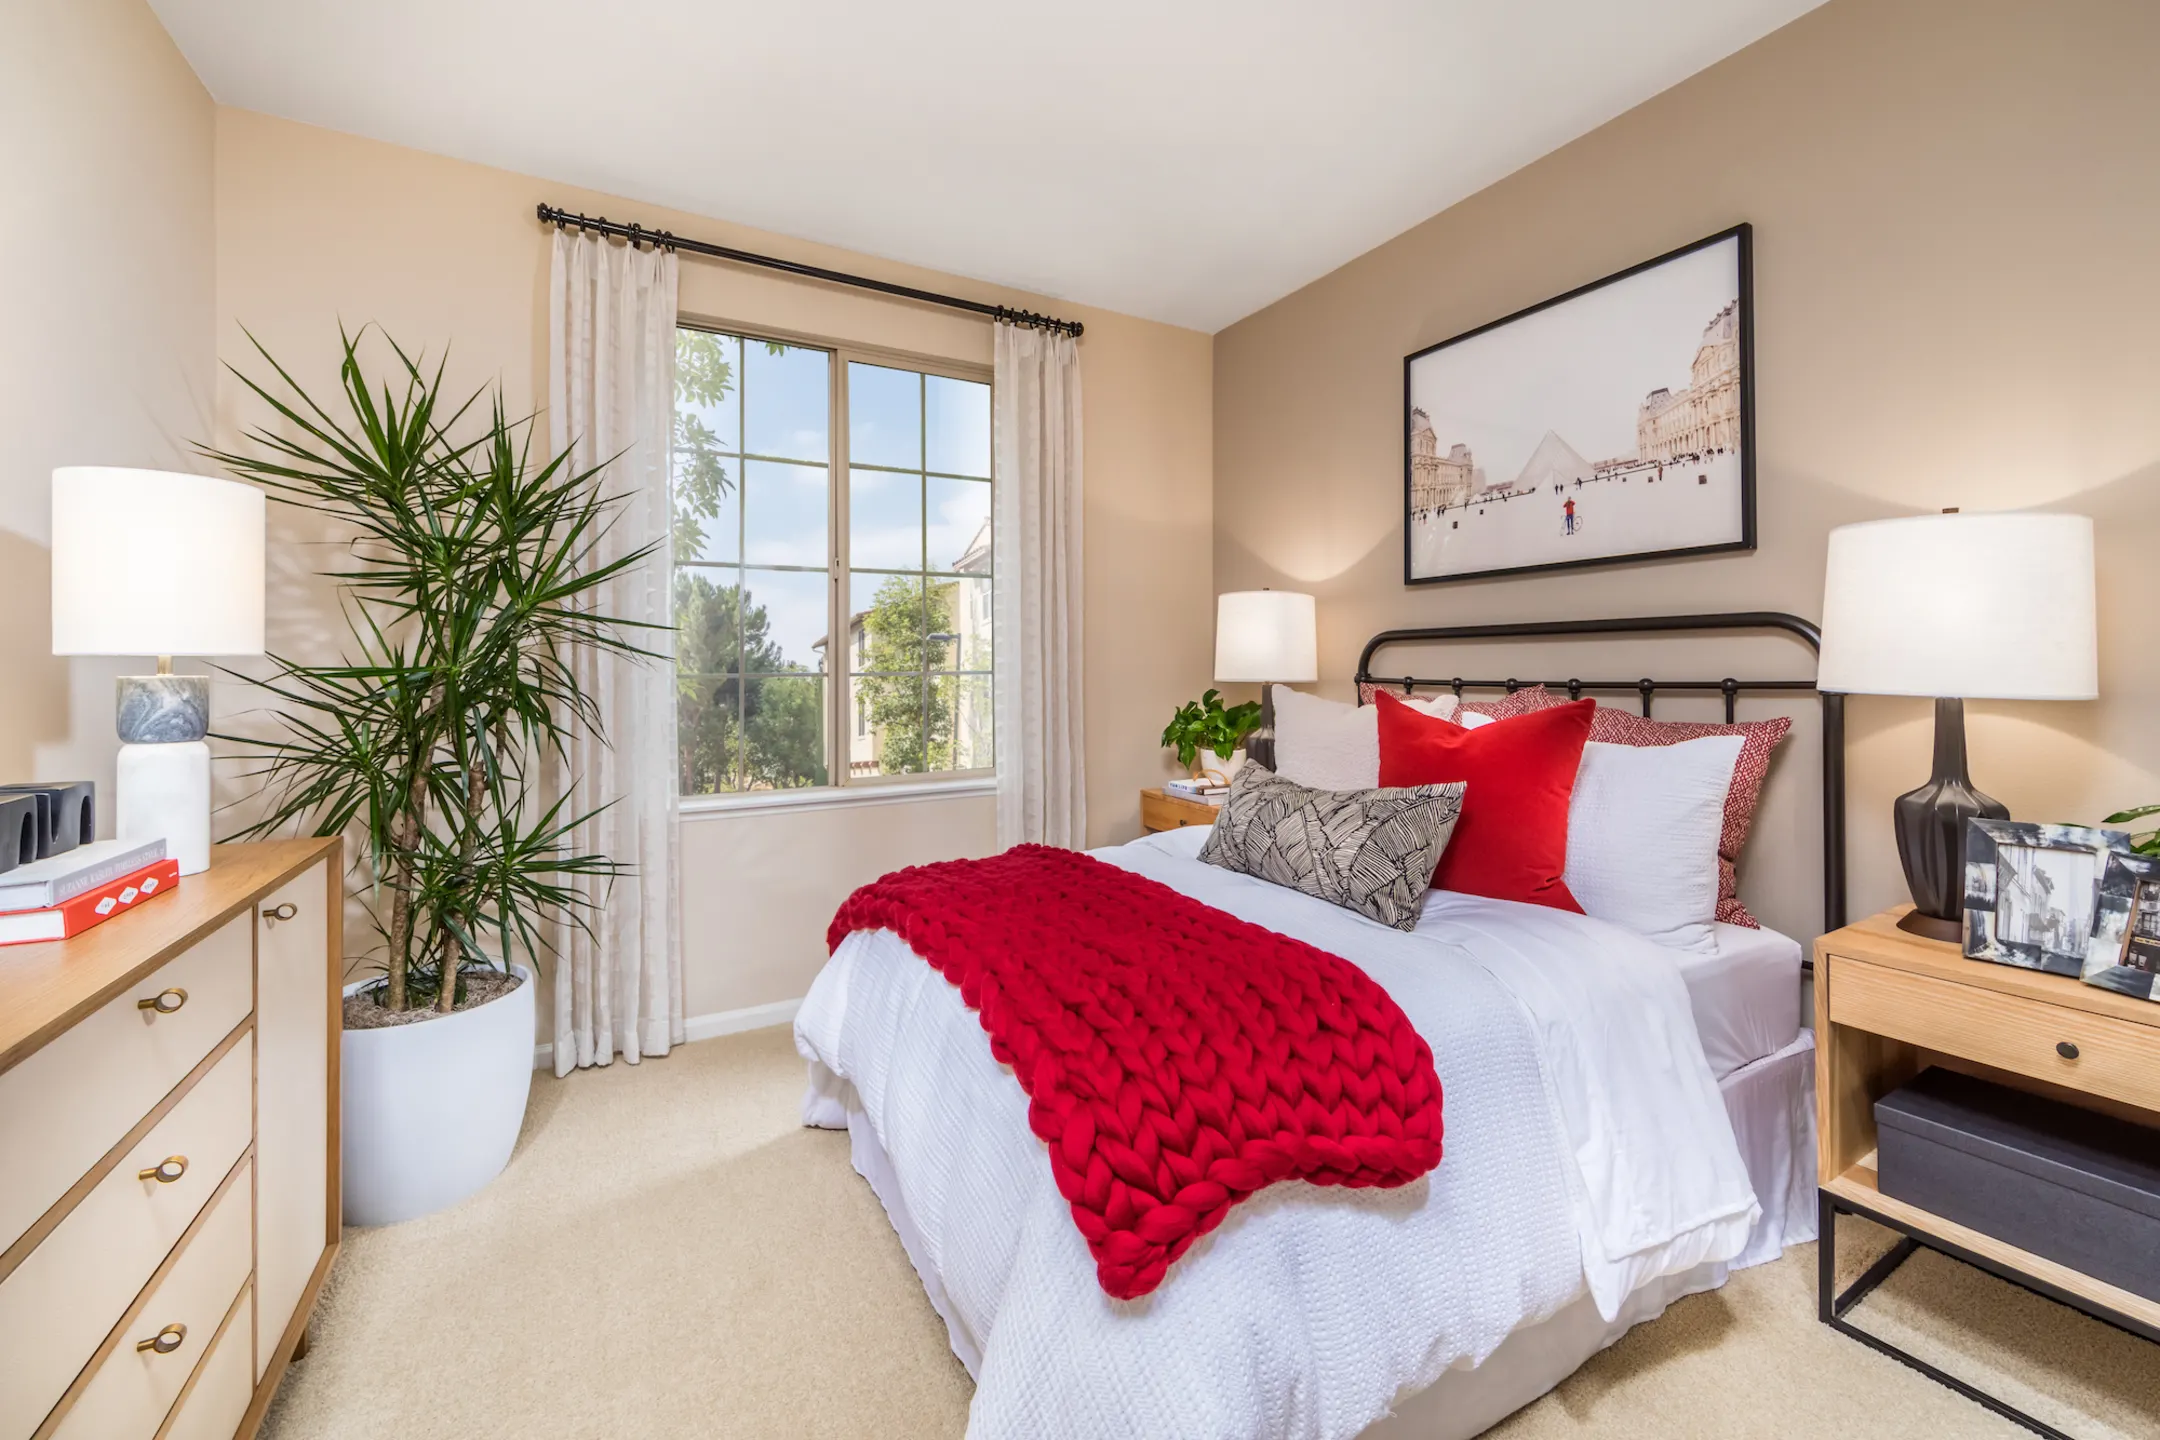 Bedroom - Woodbury Lane Apartment Homes - Irvine, CA